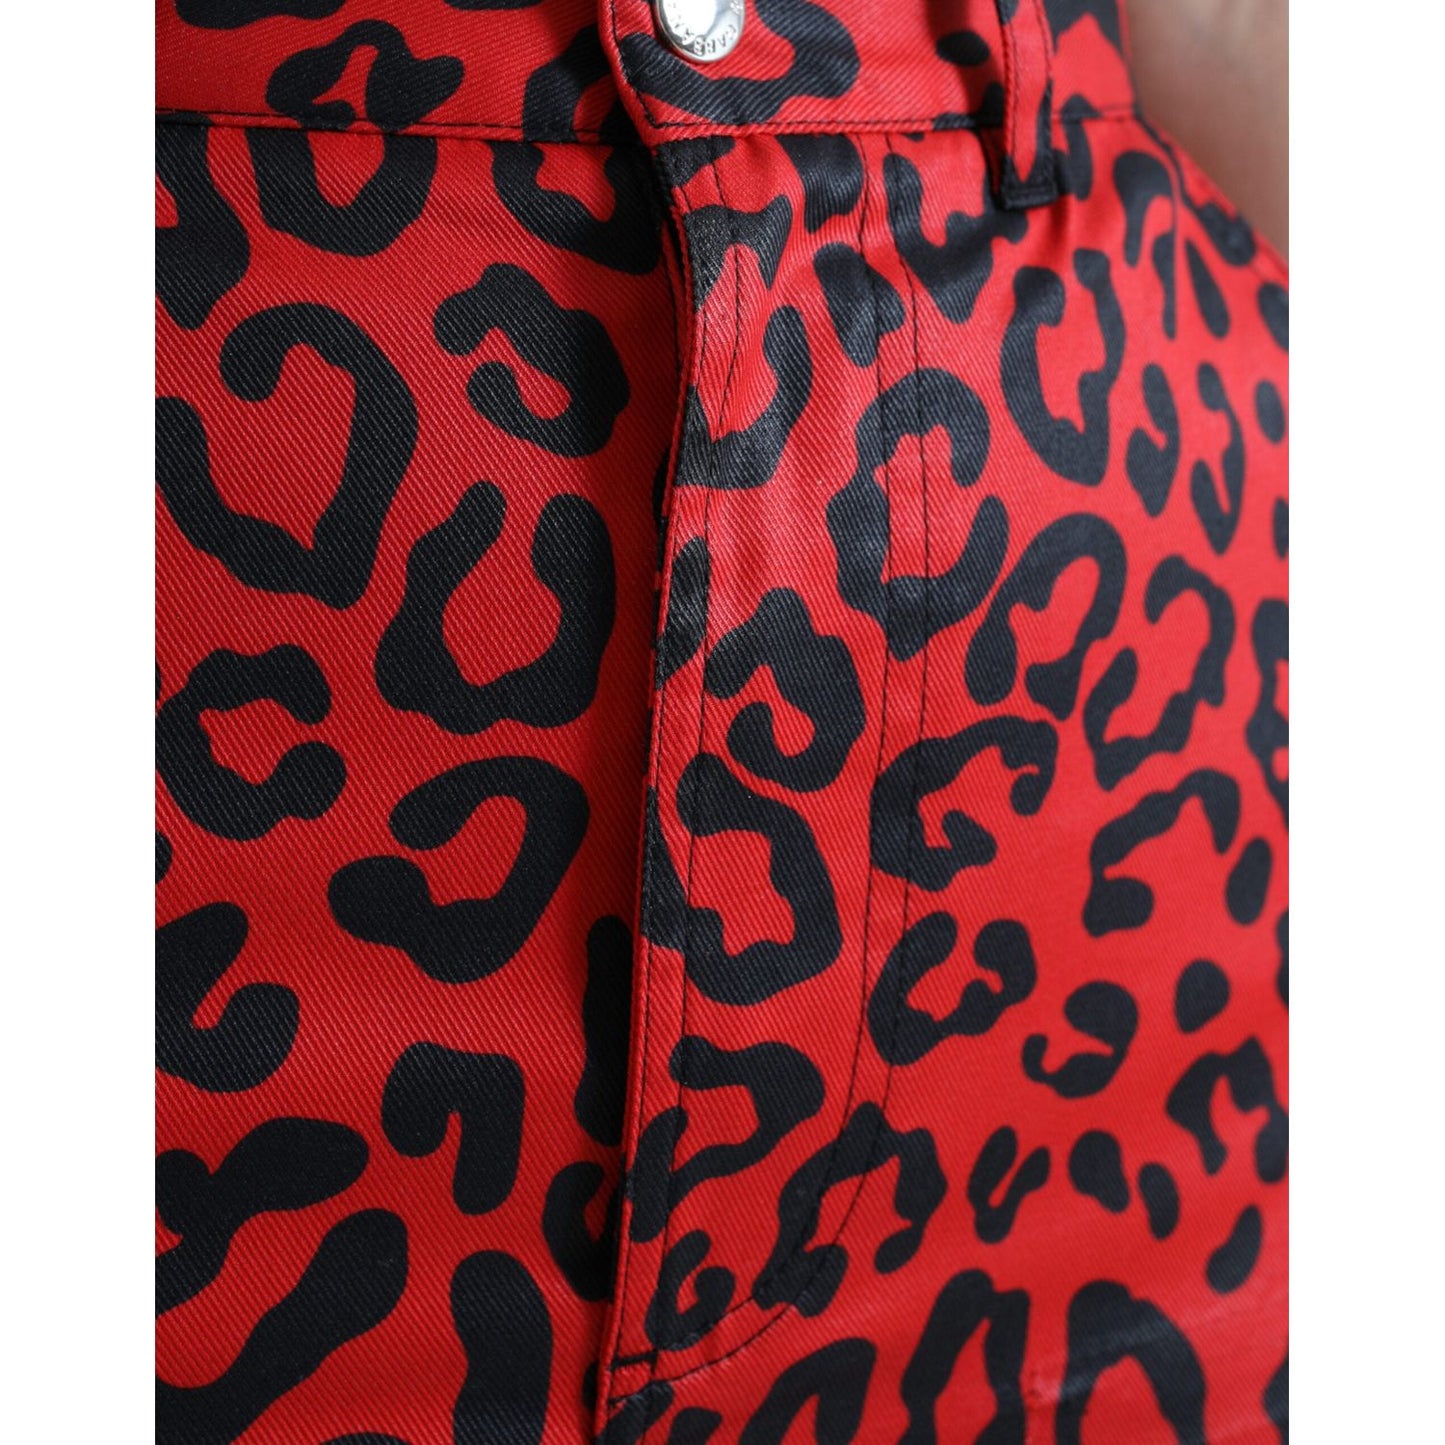 Dolce & Gabbana Red Leopard Print Cotton High Waist Mini Skirt red-leopard-print-cotton-high-waist-mini-skirt 465A1097-BG-scaled-3a557f3d-cad.jpg